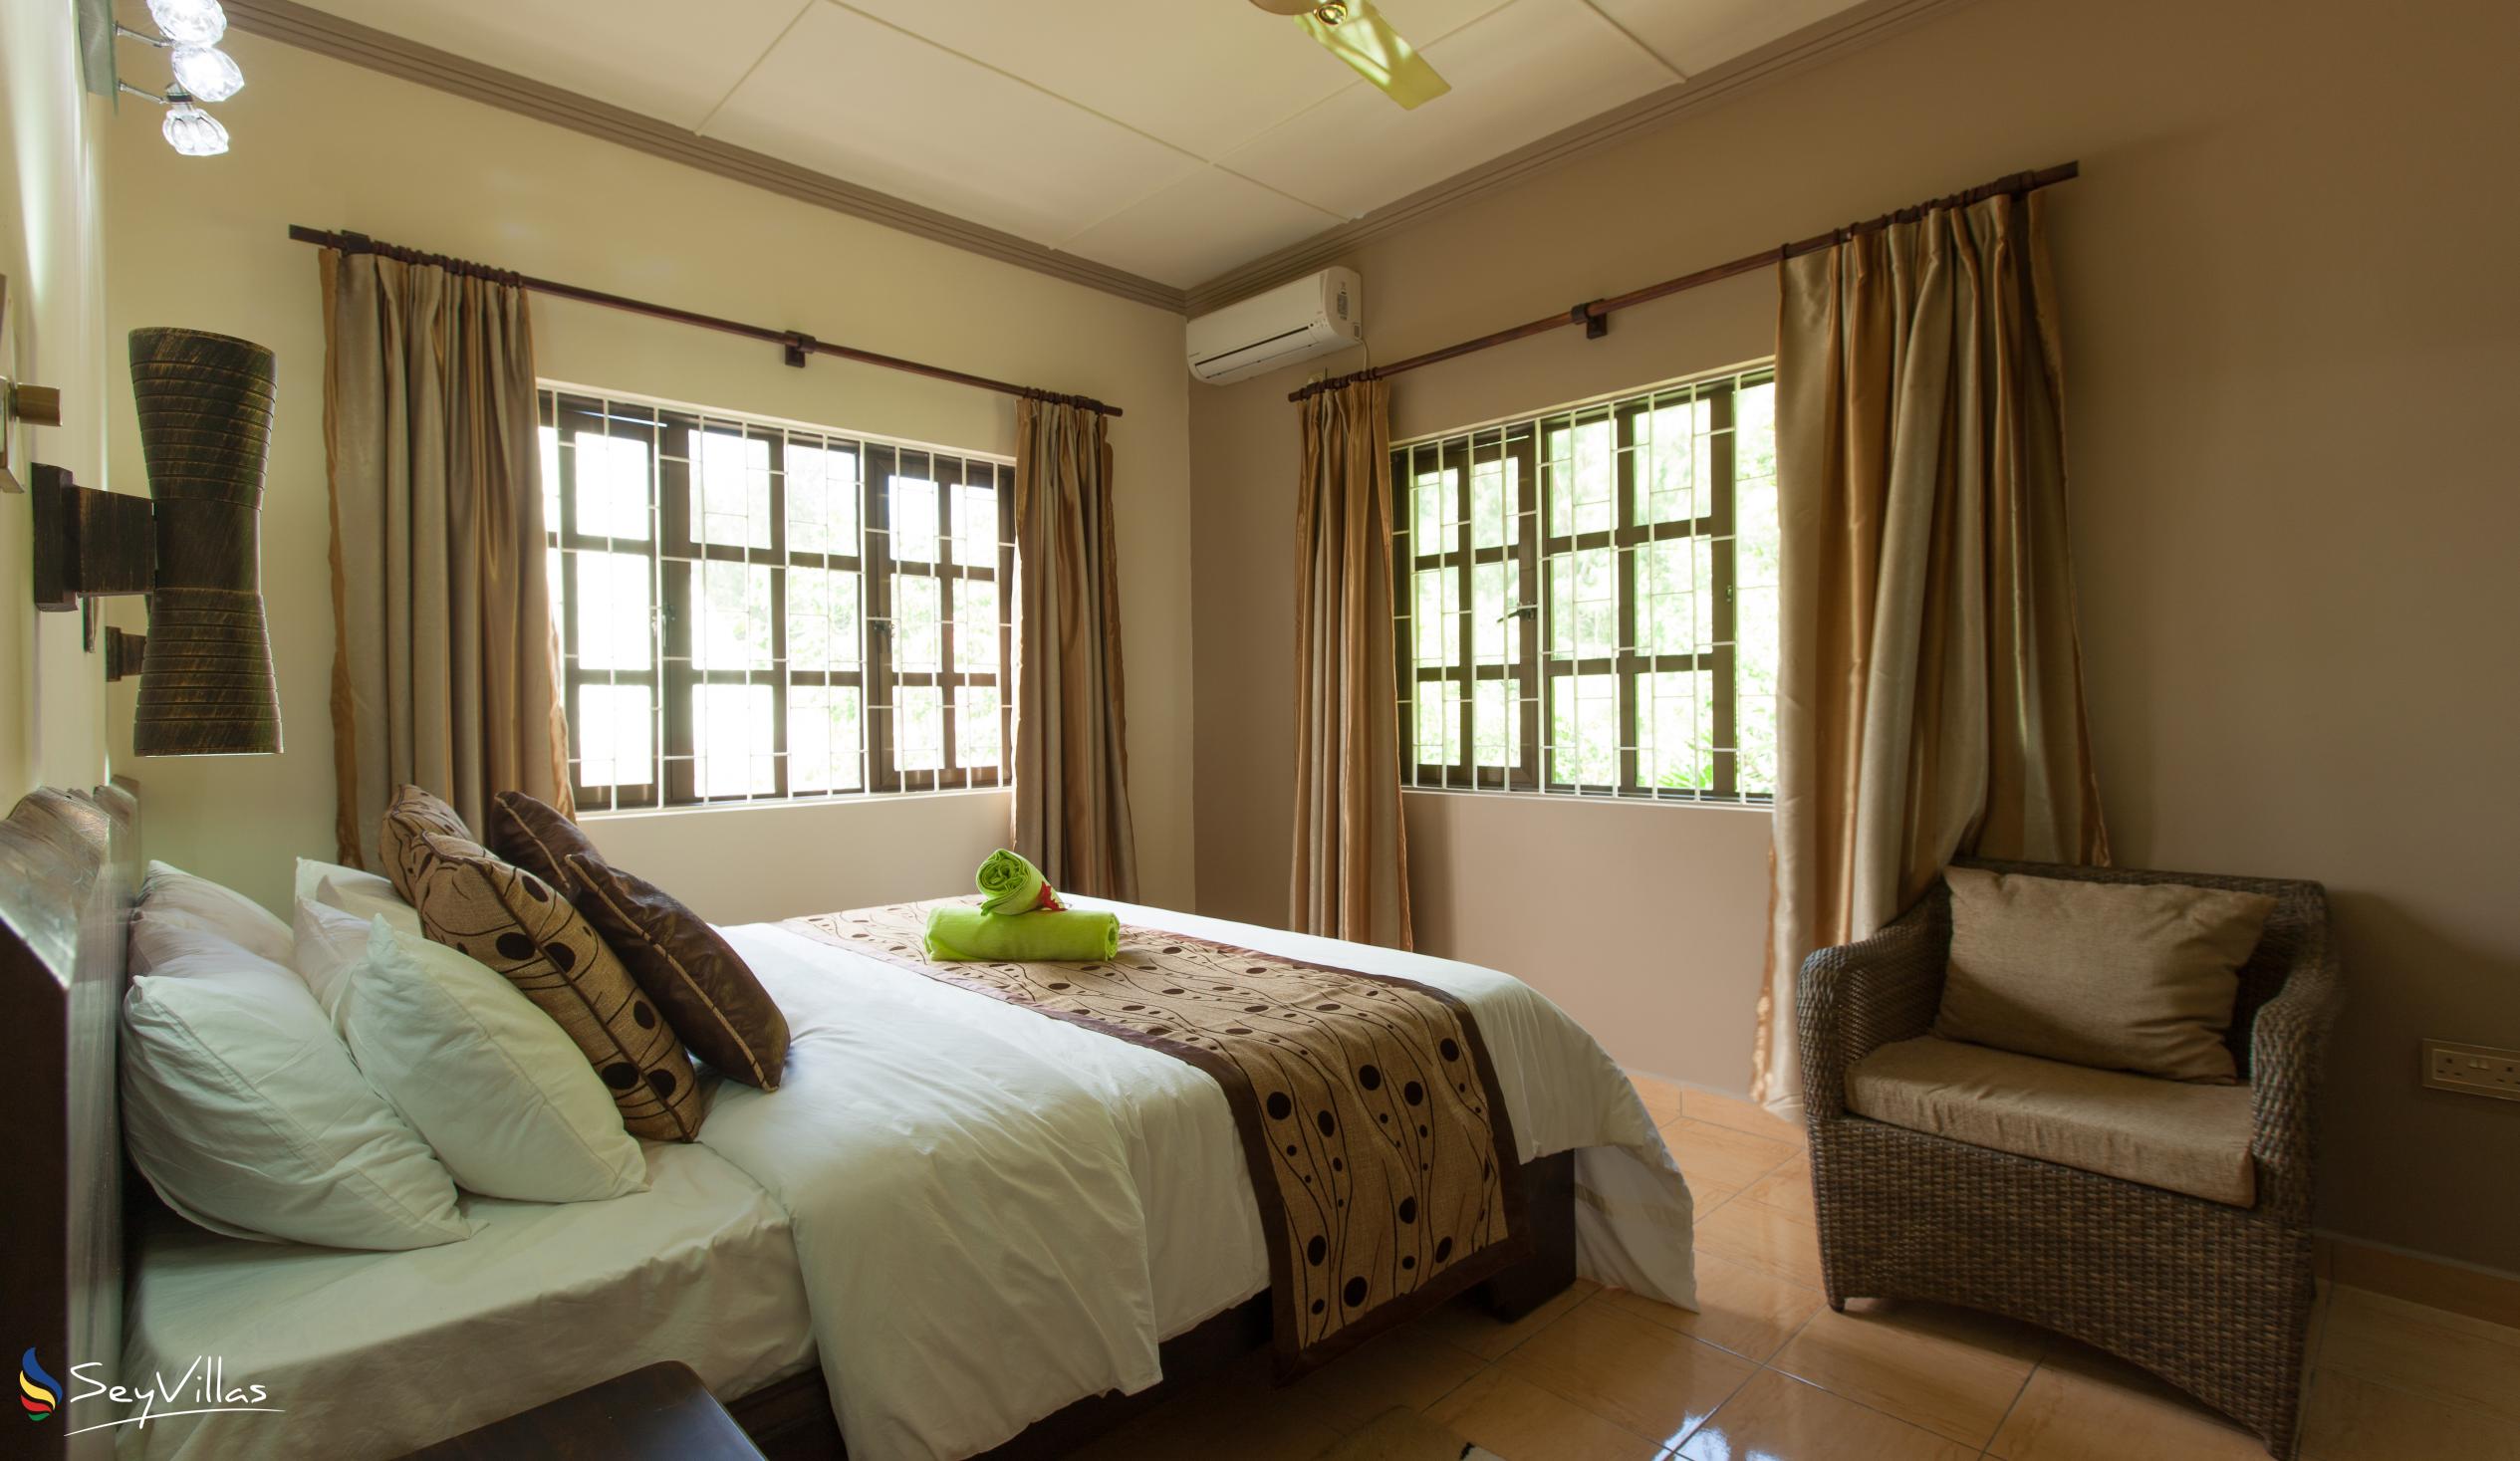 Foto 50: Chez Bea Villa - Appartement 2 chambres - Praslin (Seychelles)